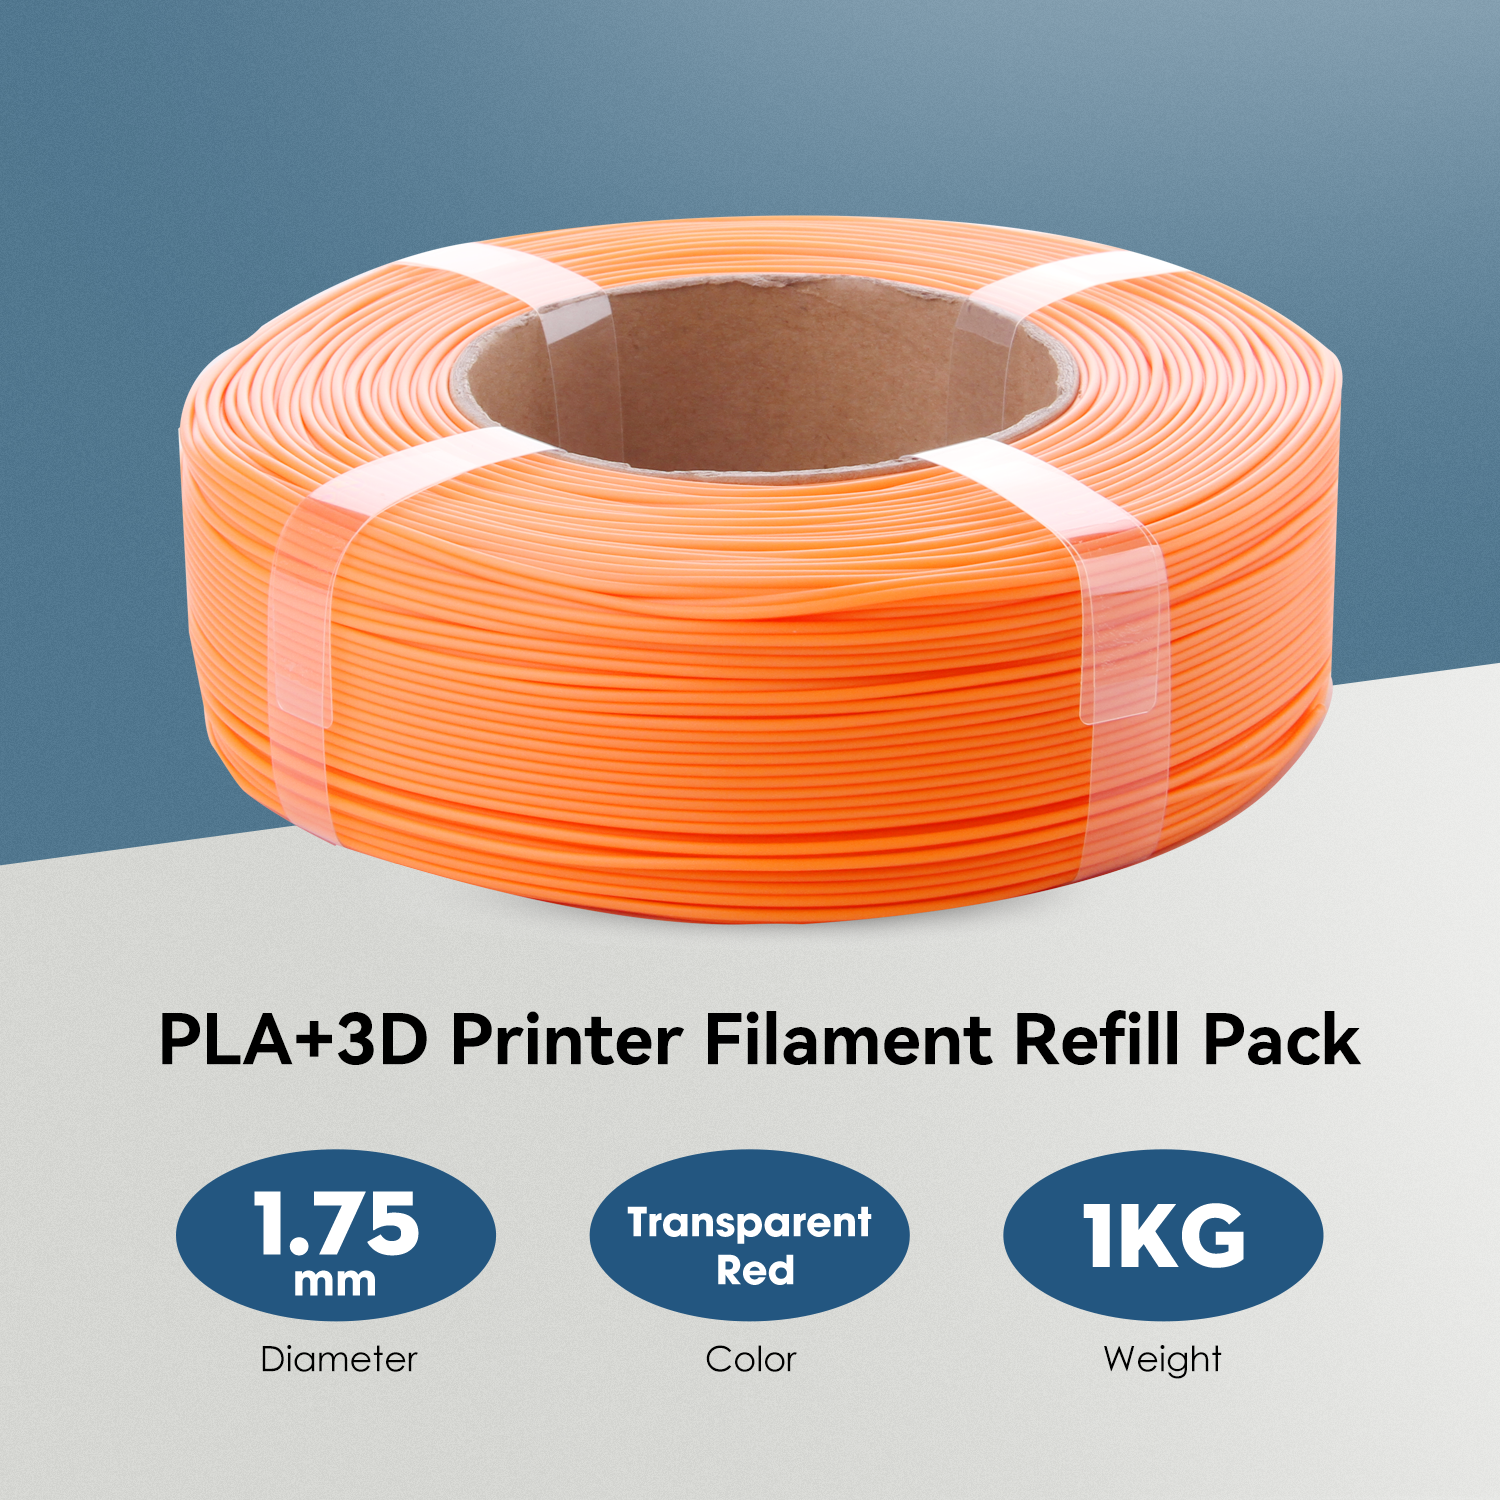 eSUN PETG Re-Filament Refill Pack 1.75mm 1kg